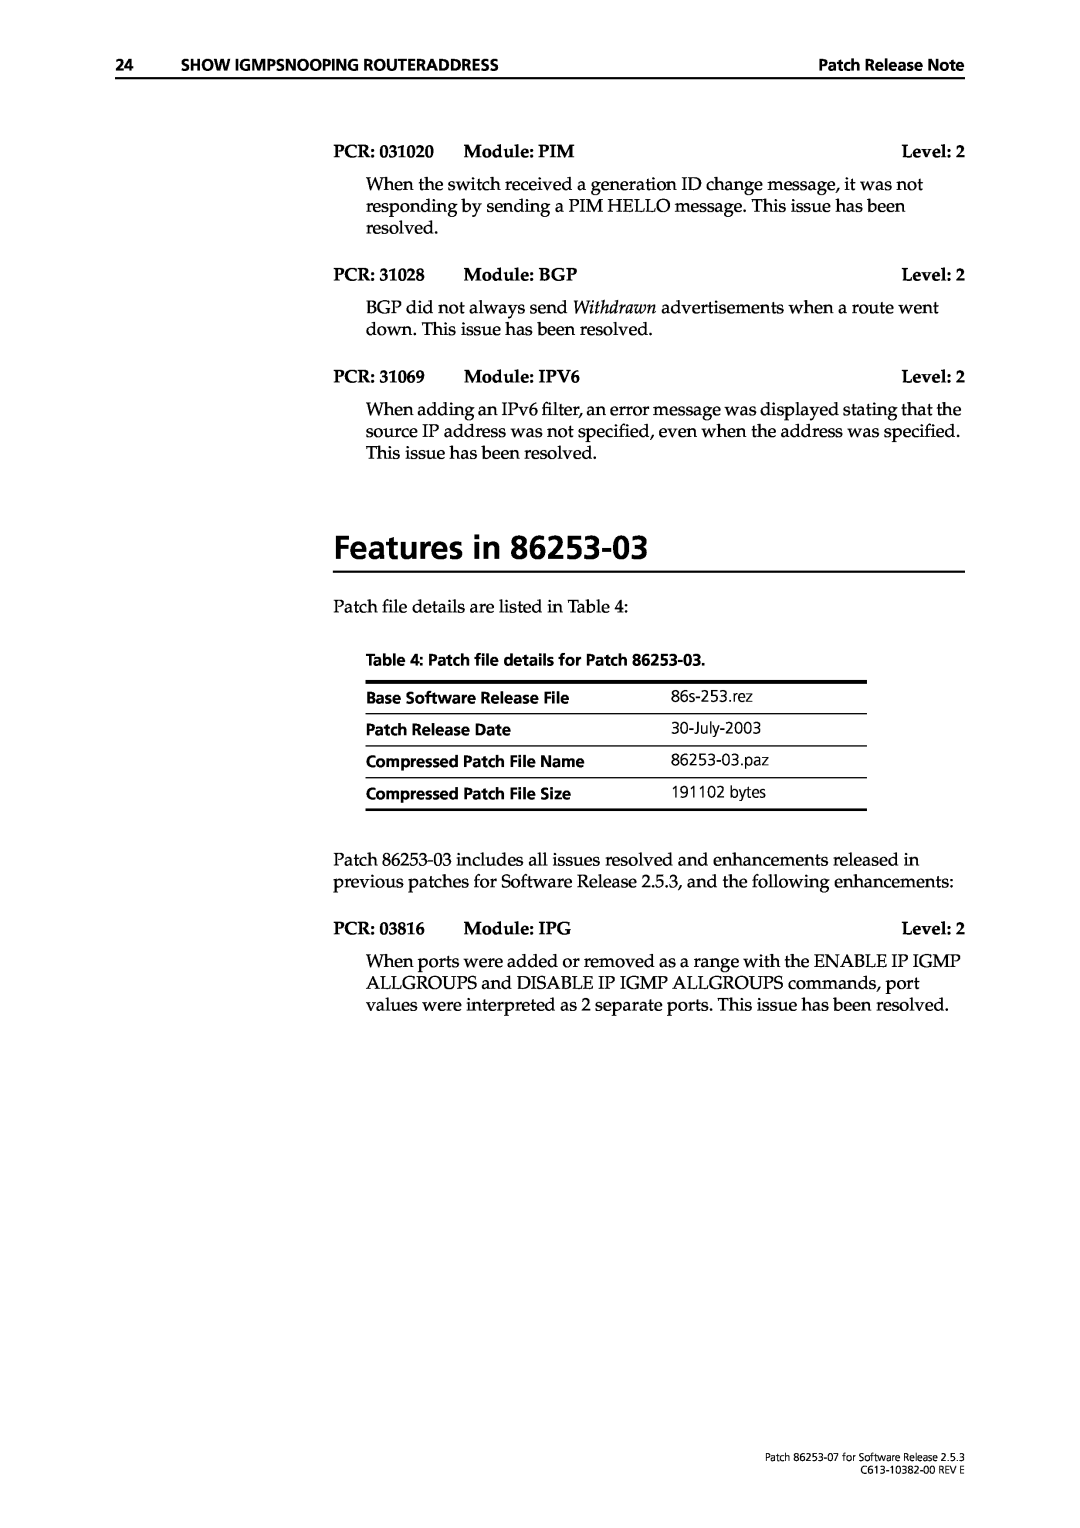 Allied Telesis 86253-07 manual Features in, PCR 031020 Module PIM 